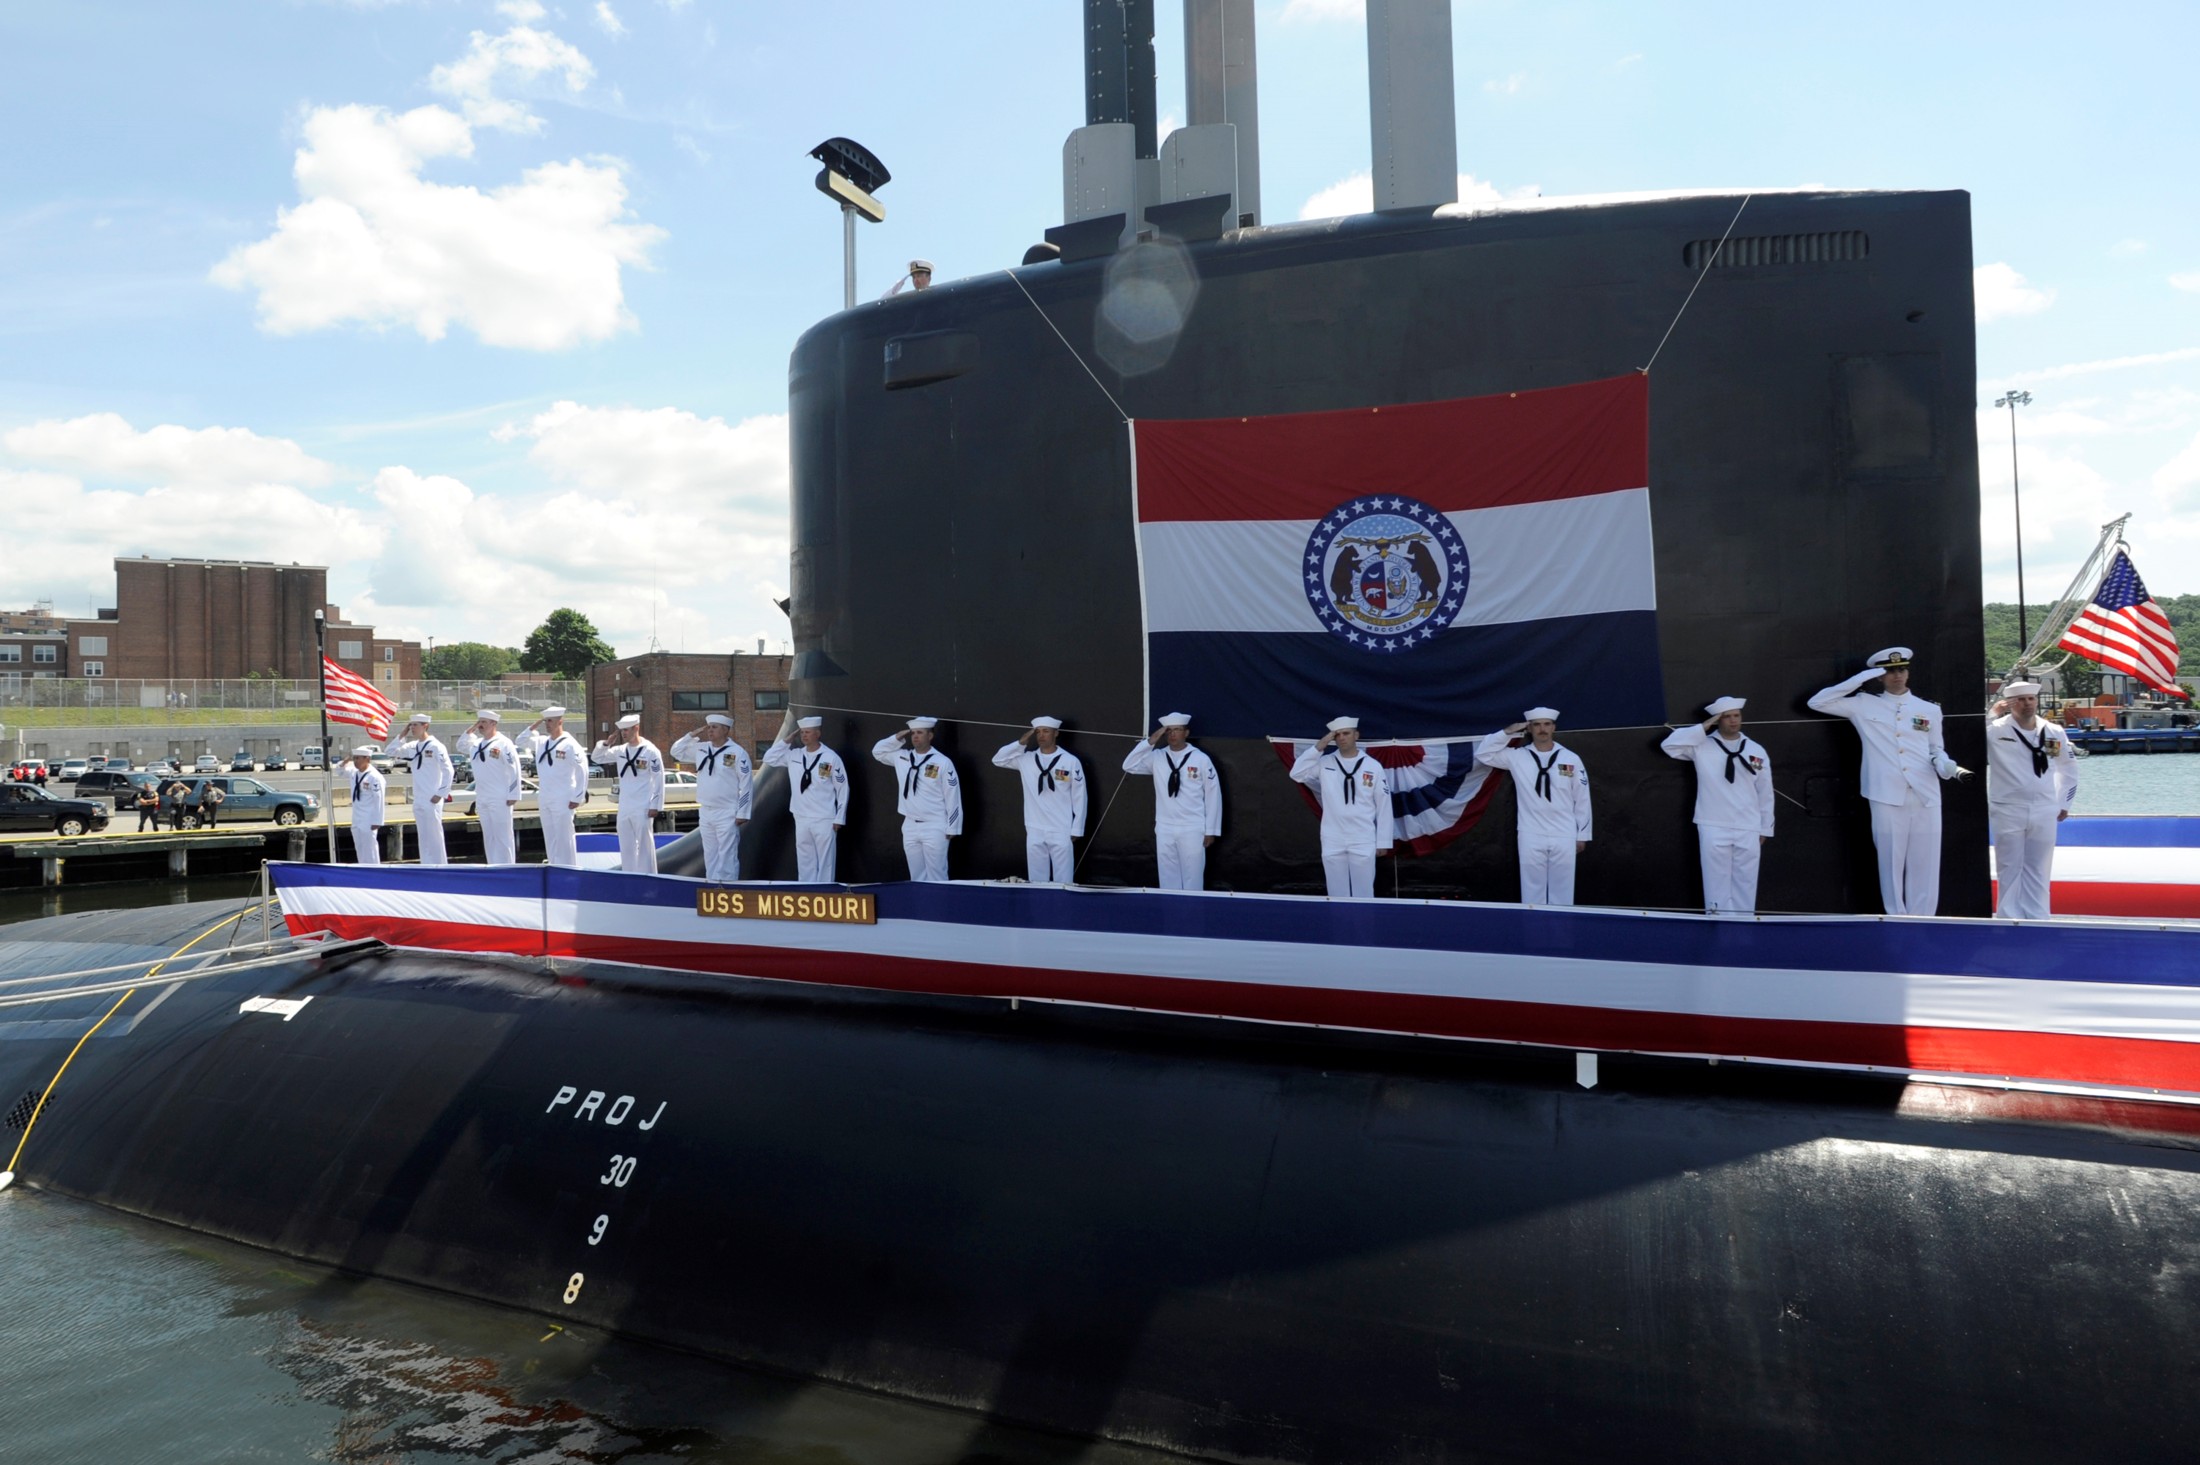 ssn-780 uss missouri virginia class attack submarine us navy 16 commissioning ceremony new london groton